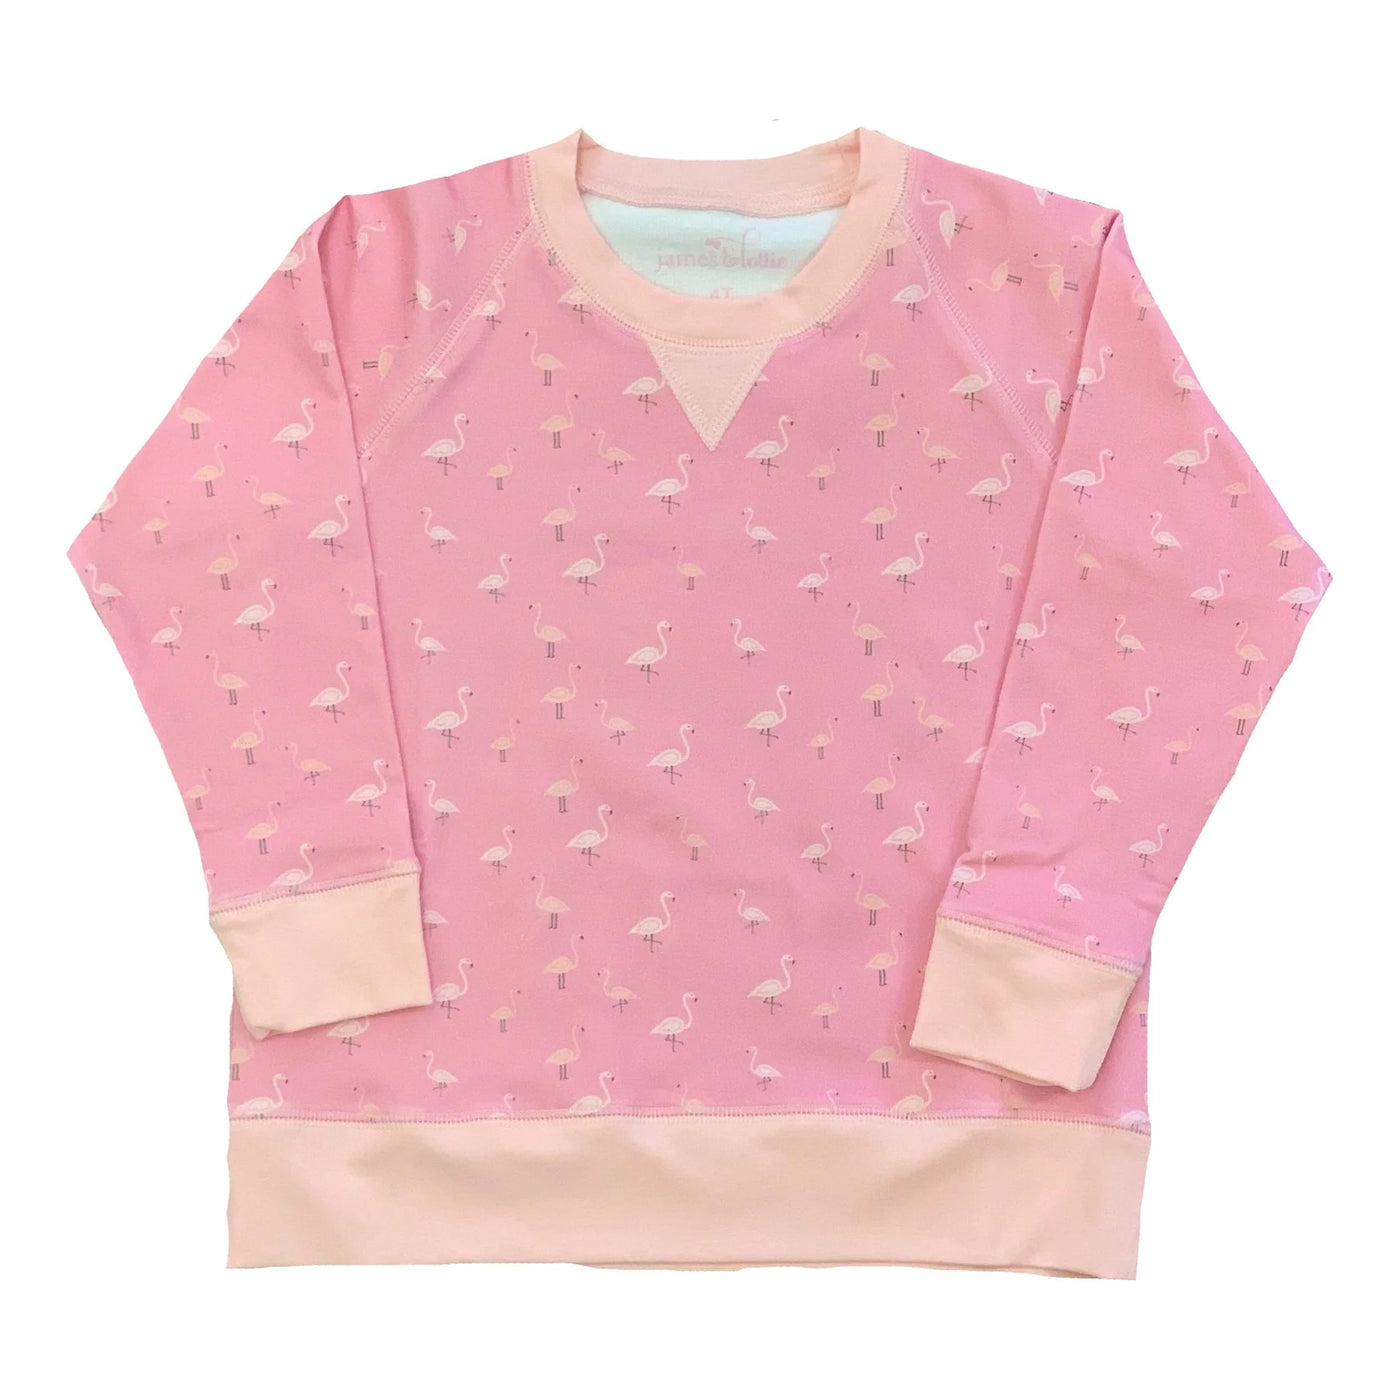 Flamingo Sally Knit Sweatshirt